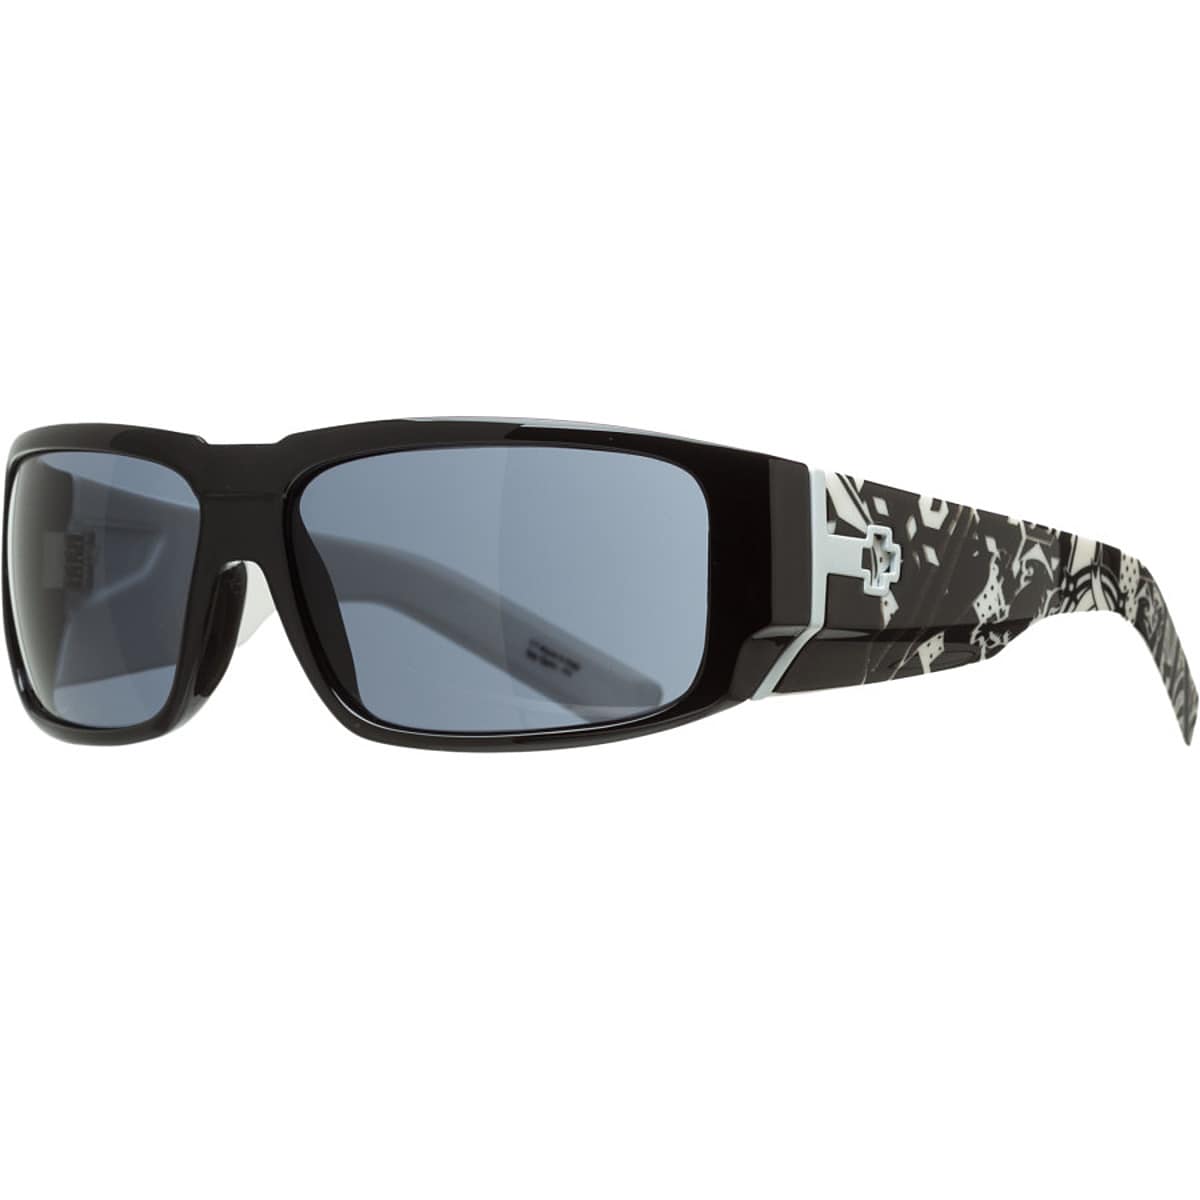 insulator antydning kighul Spy Hailwood Sunglasses - Accessories